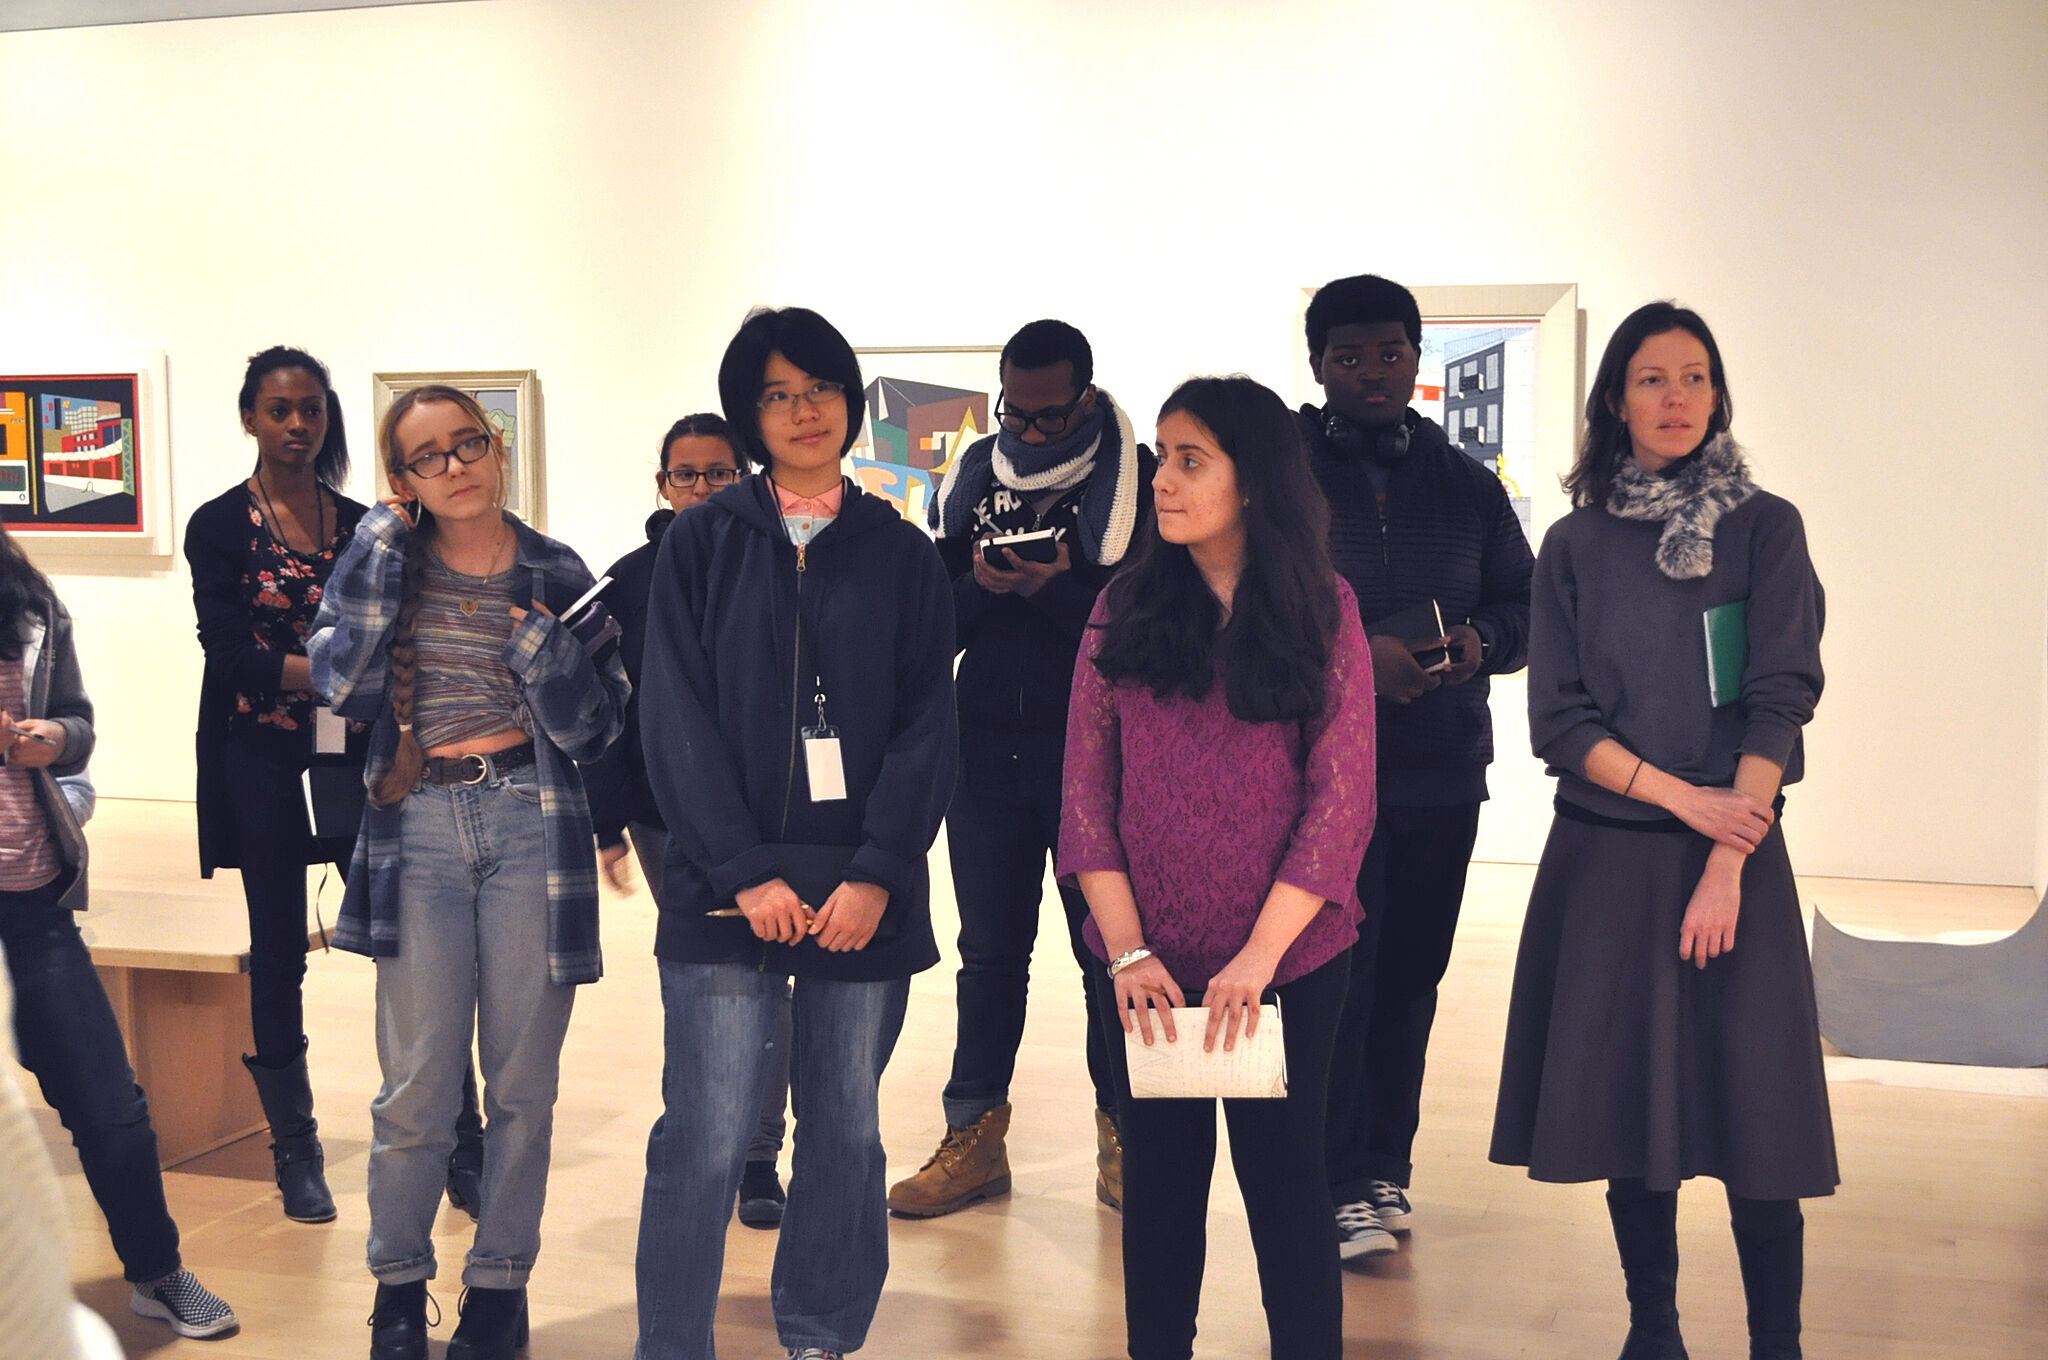 Participants discussing art works